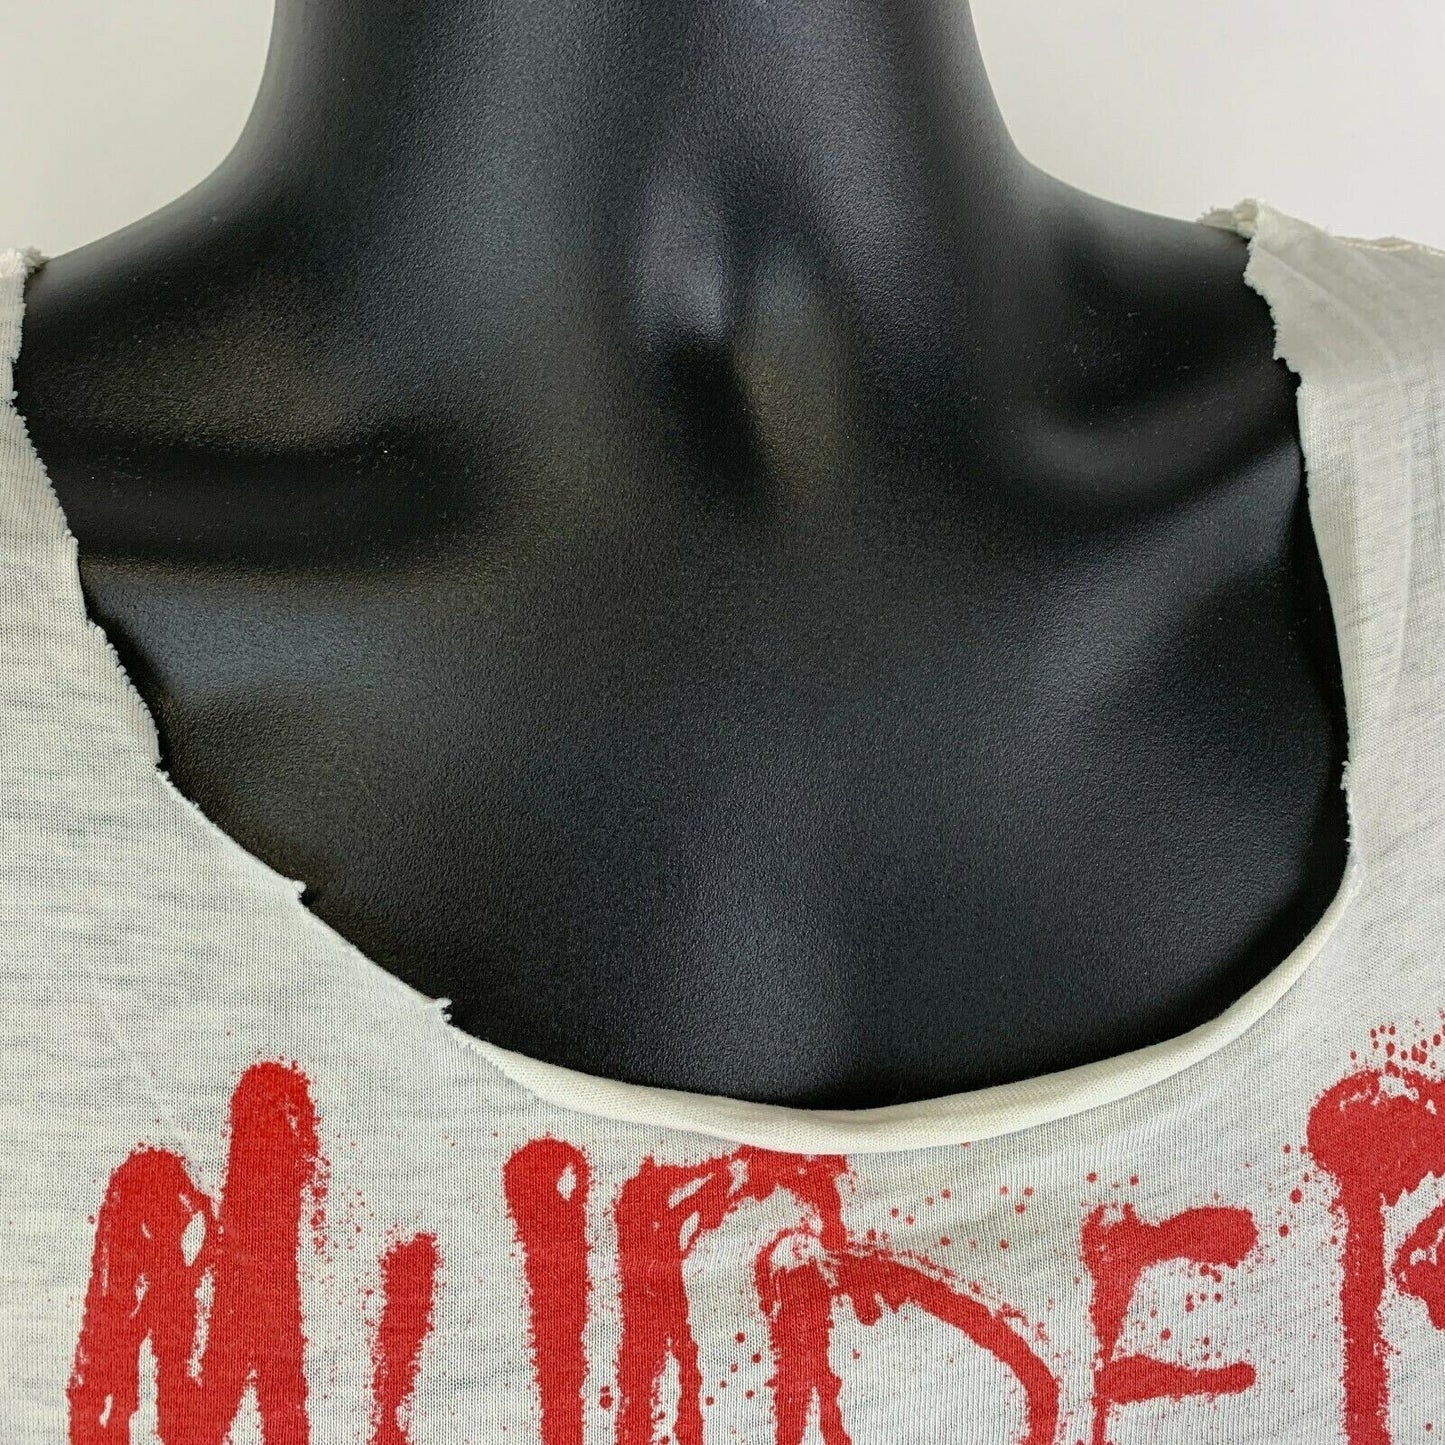 Distressed Murderers Serial Killers Vintage 70s 80s T Shirt Punk Horror Medium